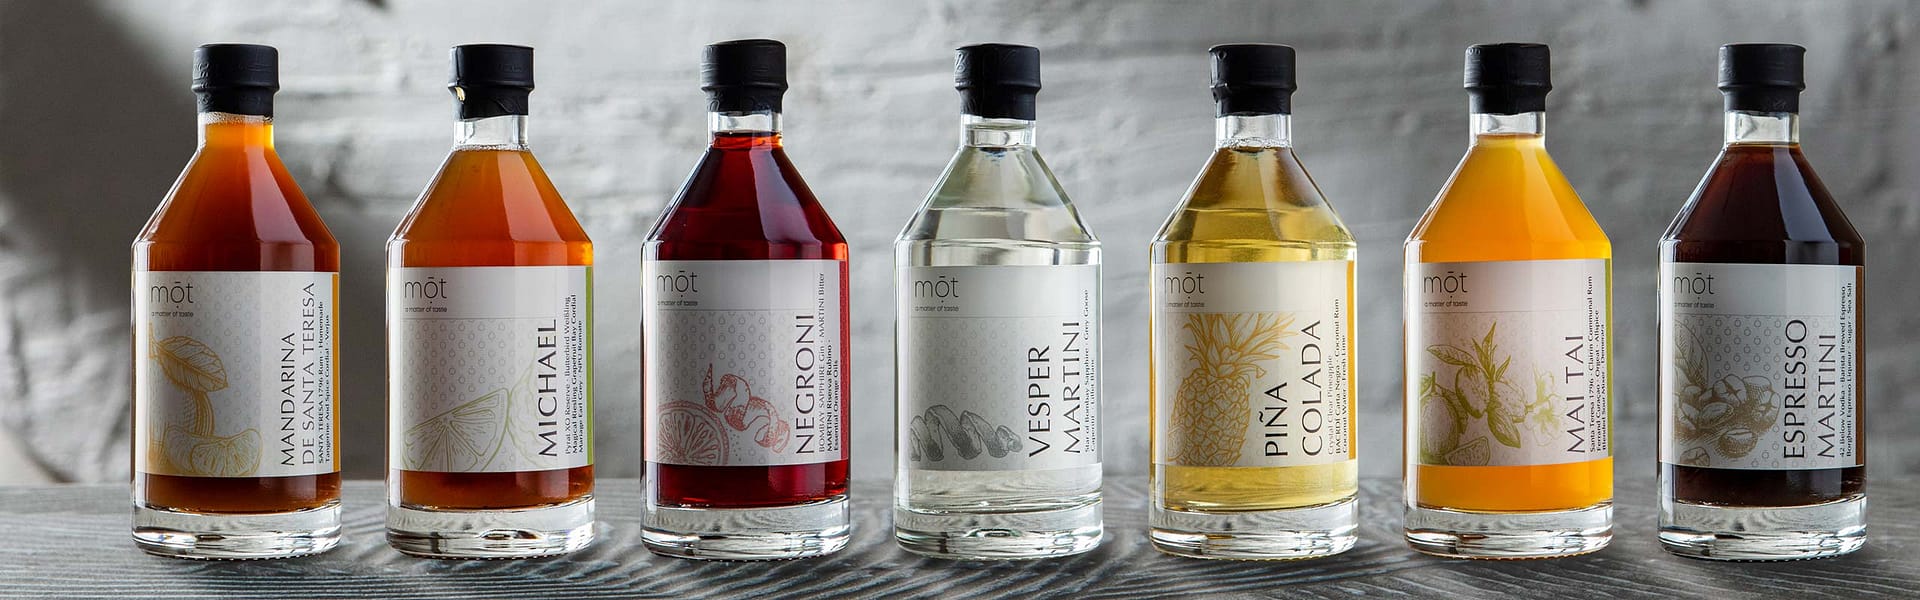 Die stillen Bottled Cocktails, trinkfertig im mōt – a matter of taste online shop